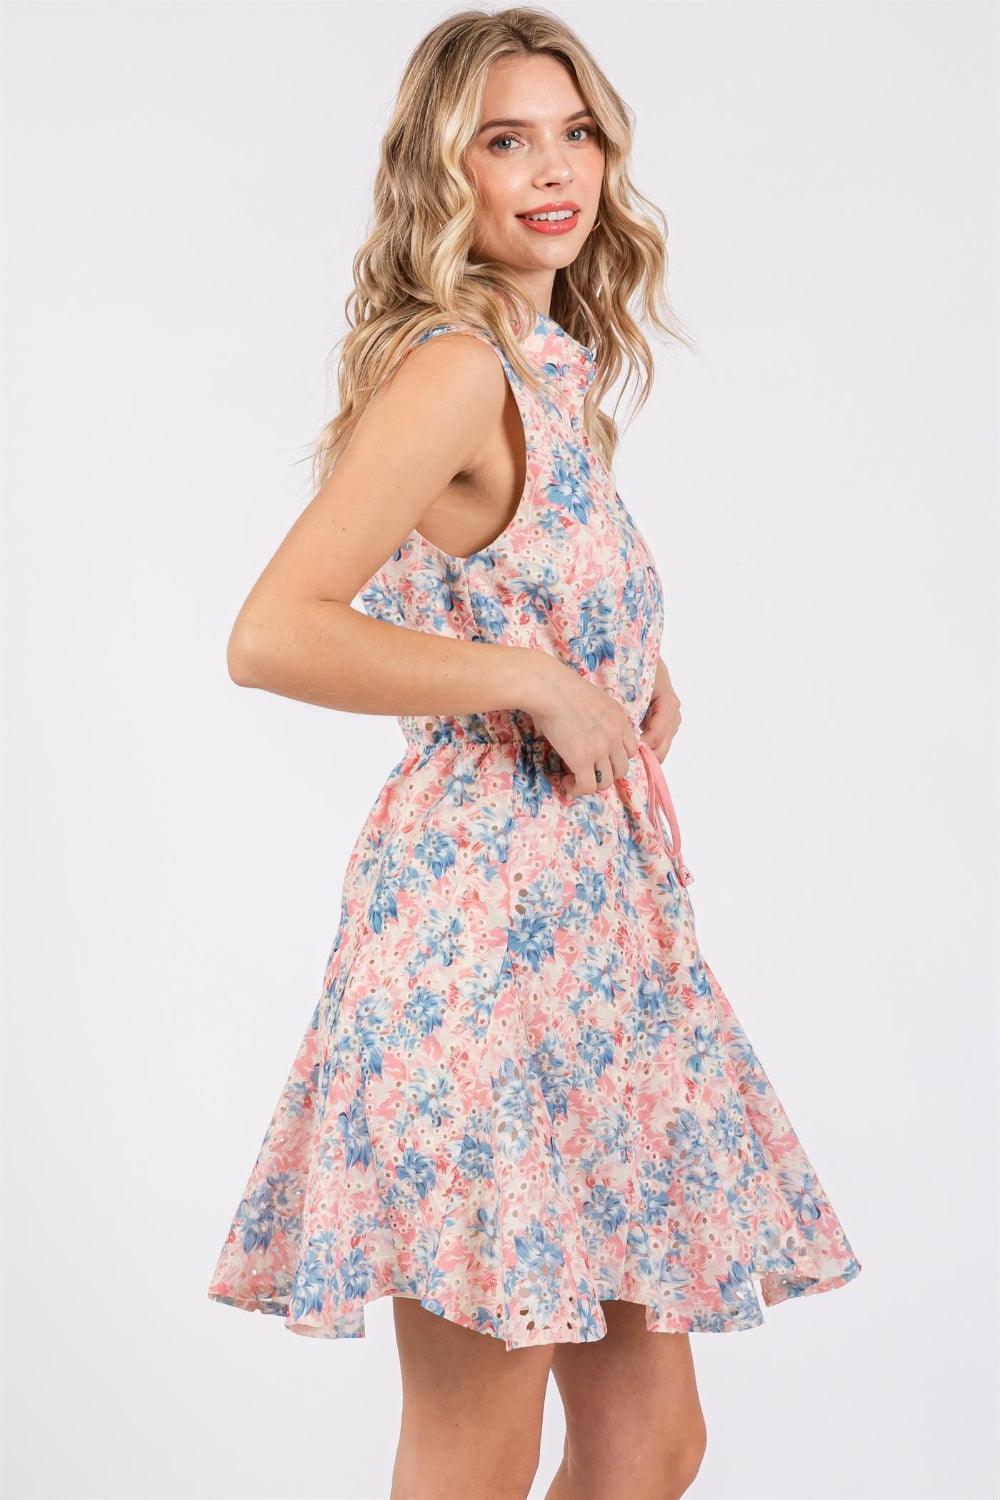 GeeGee Full Size Floral Eyelet Sleeveless Mini Dress - AMIClubwear